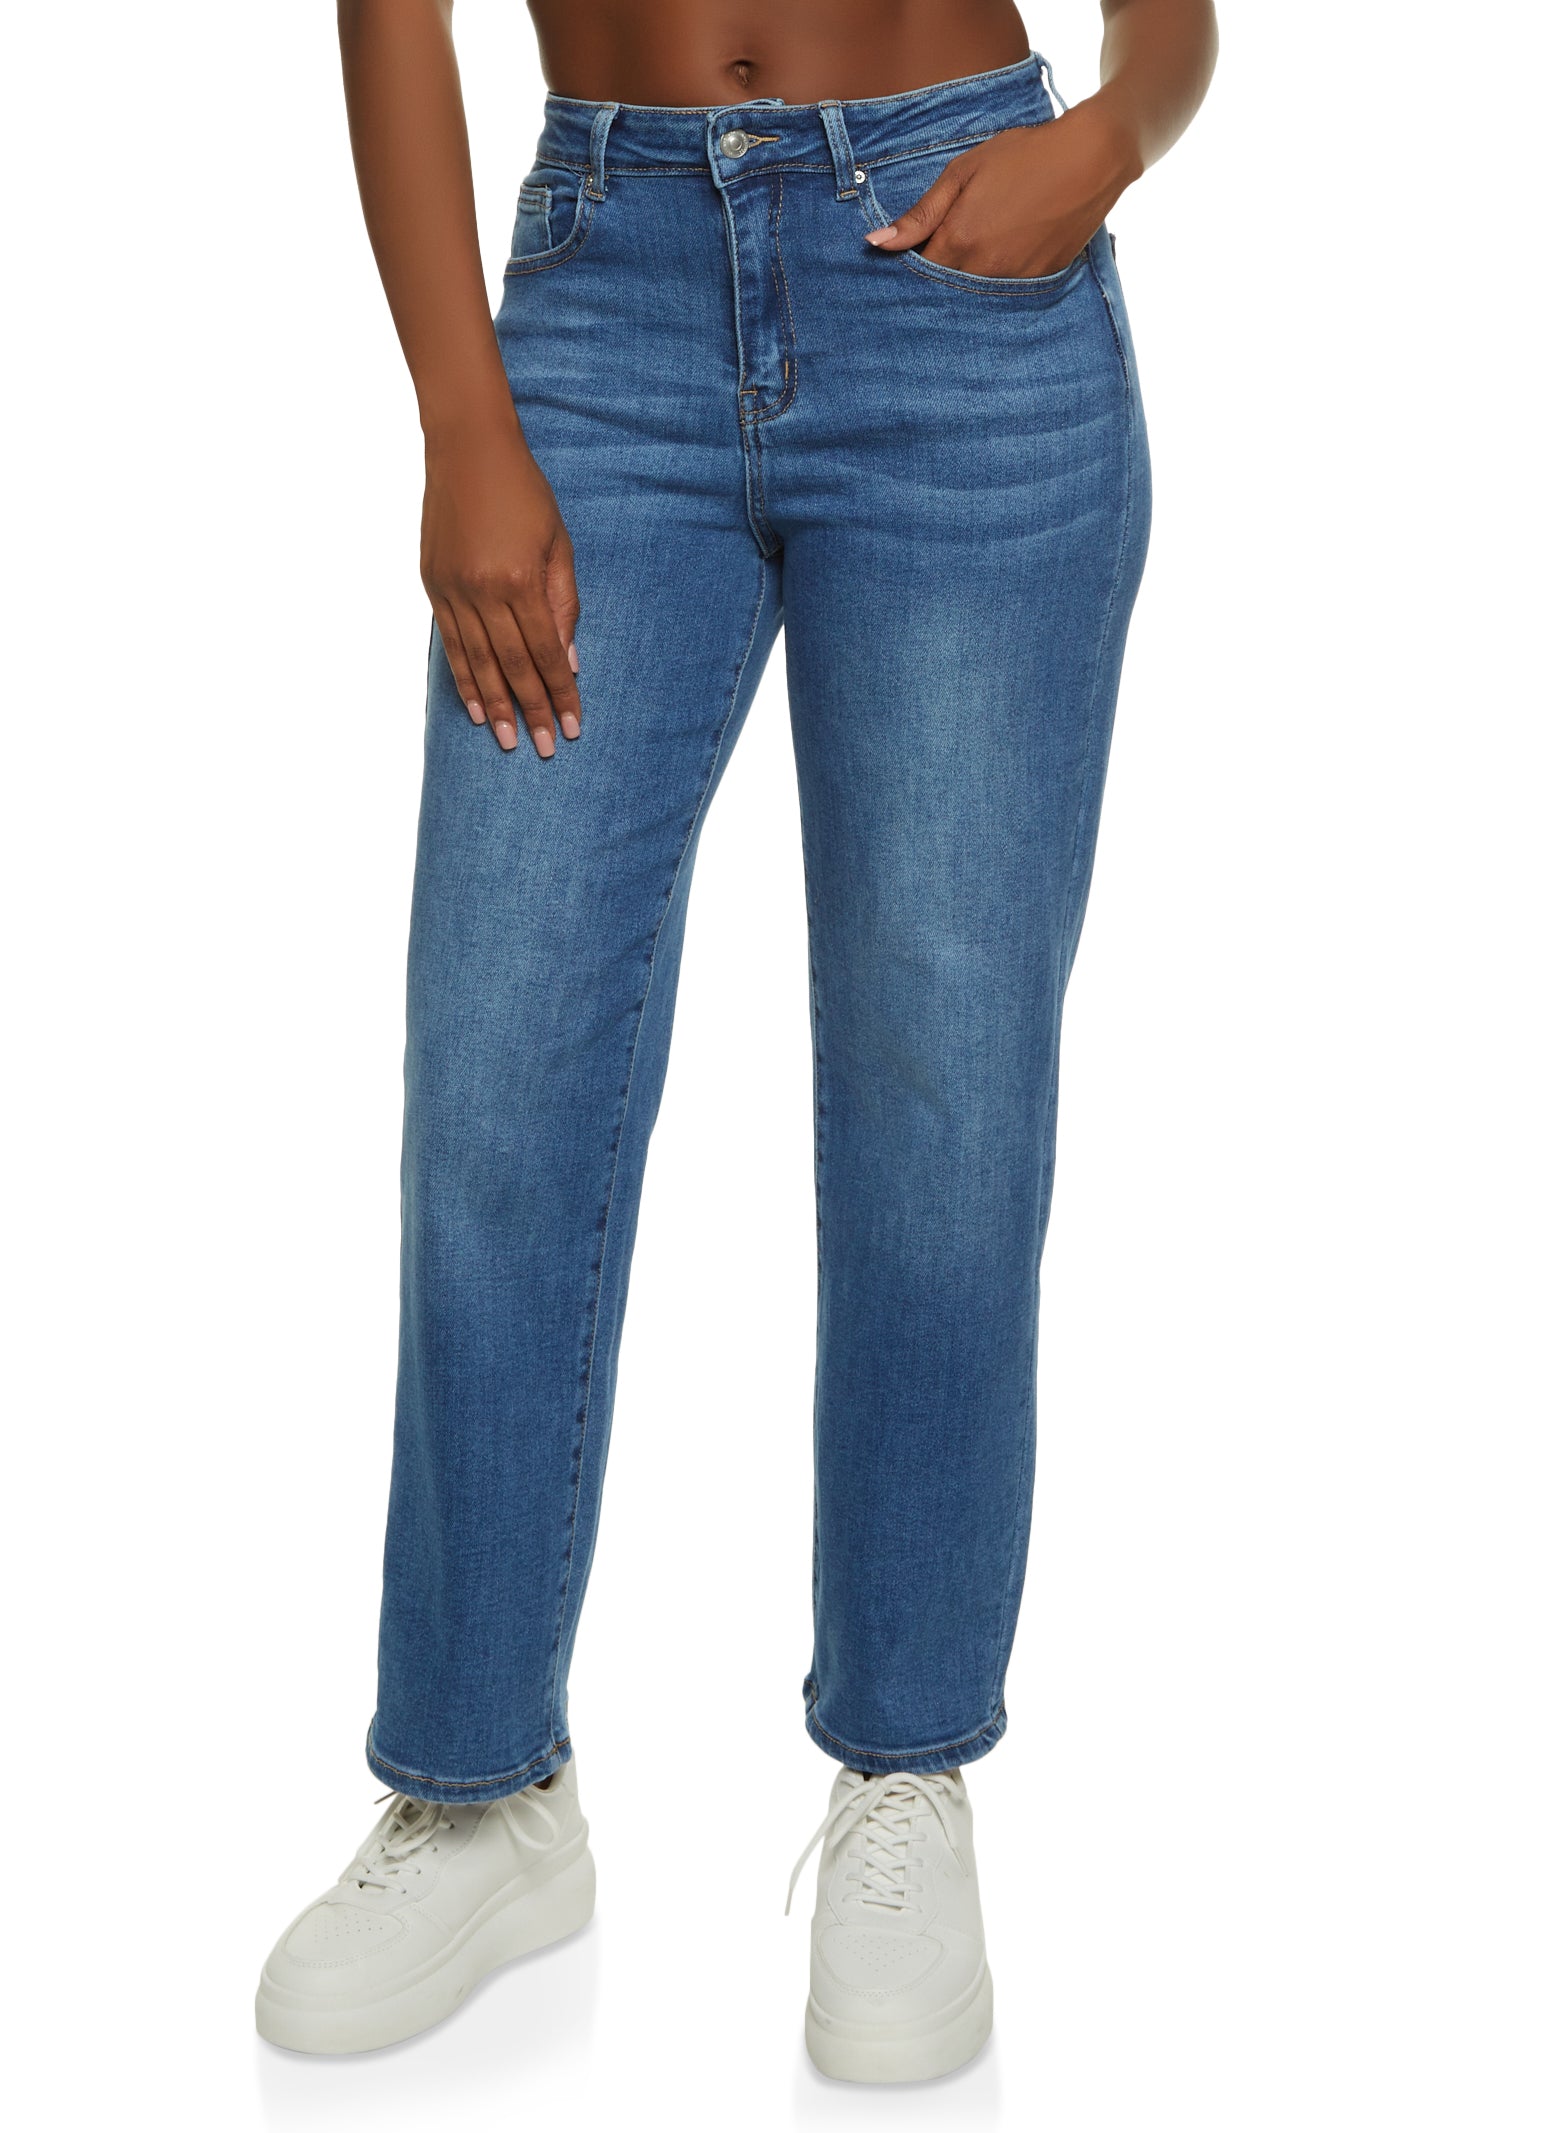 NWT Wax Jeans Women's Juniors Ankle Length Bootcut Leg Denim Overalls  Size-S